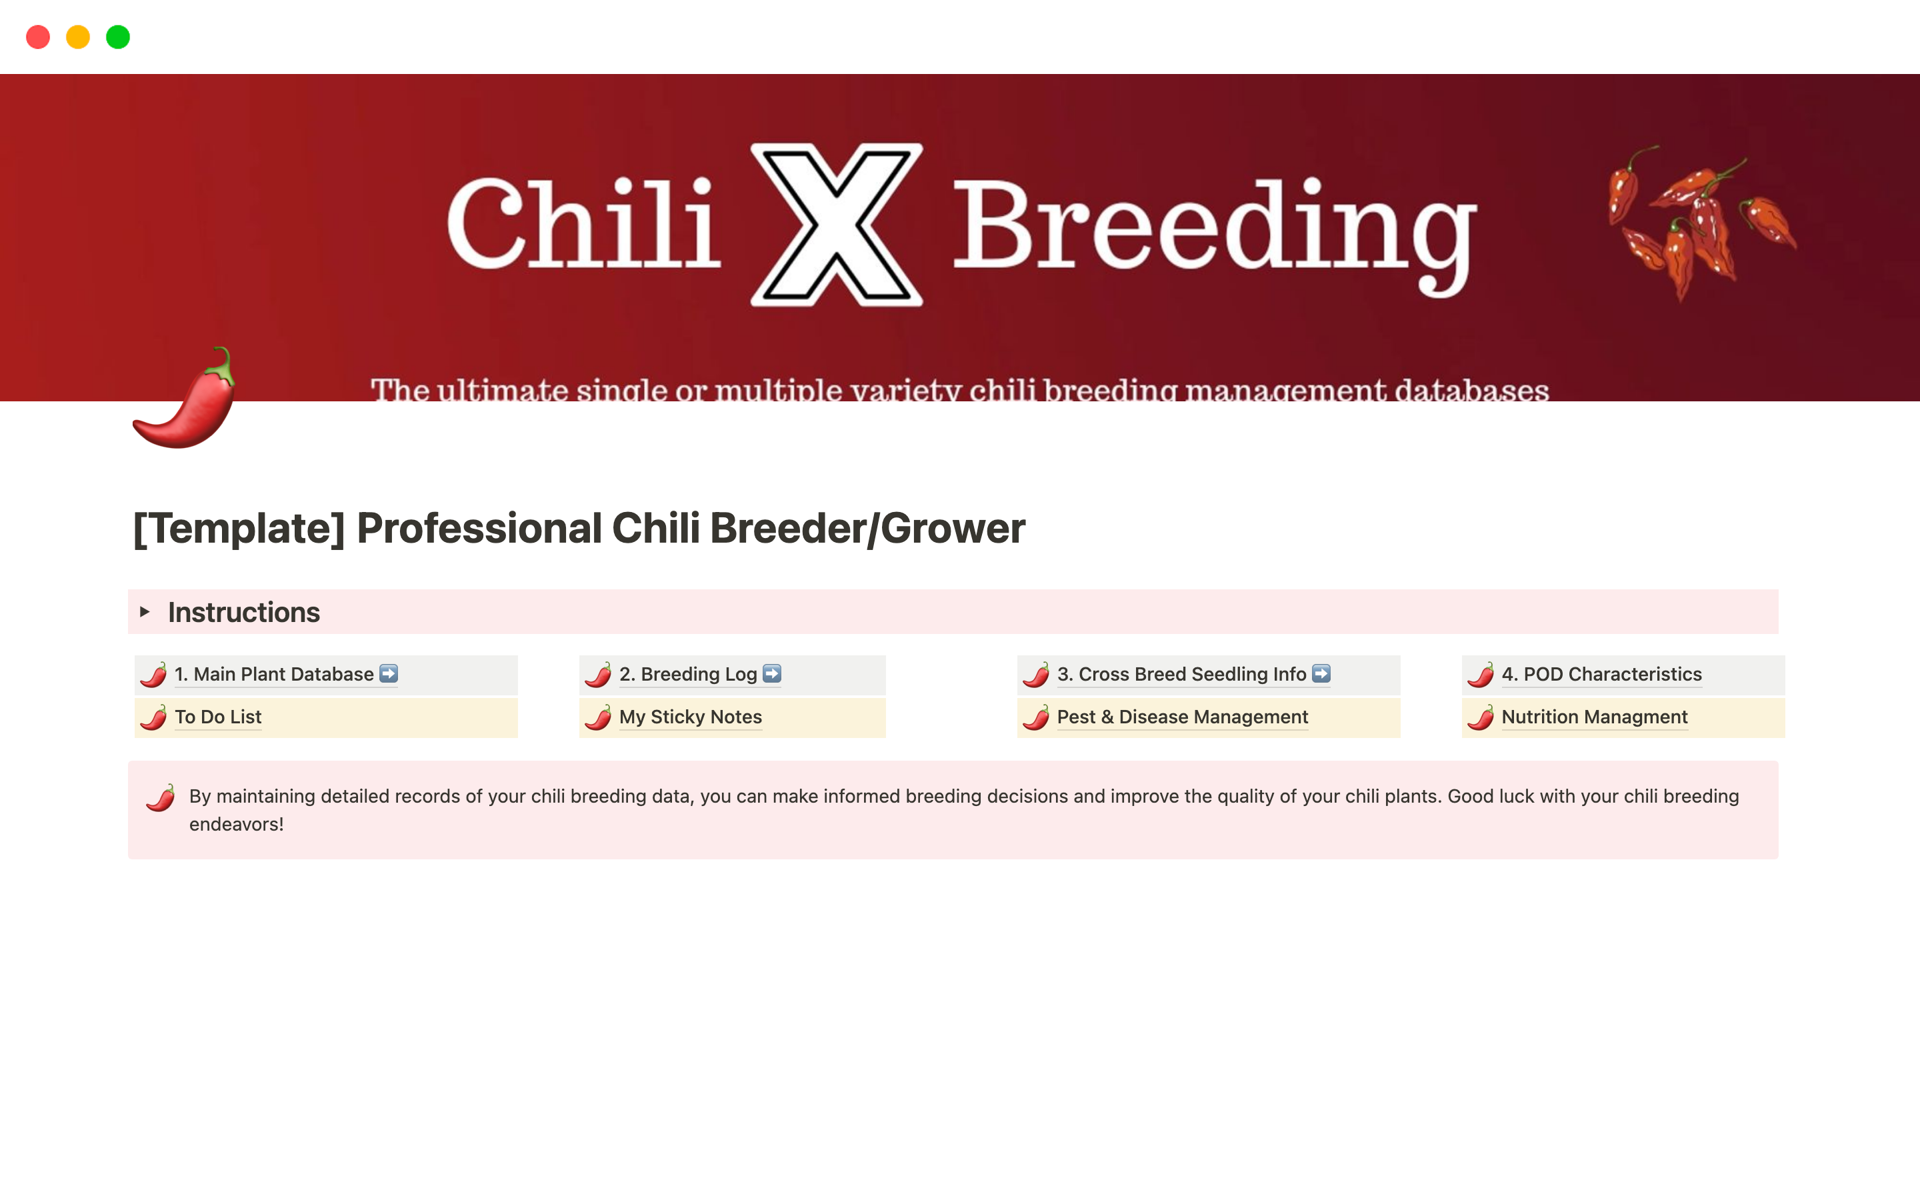 Aperçu du modèle de Professional Chili Breeder/Grower Template